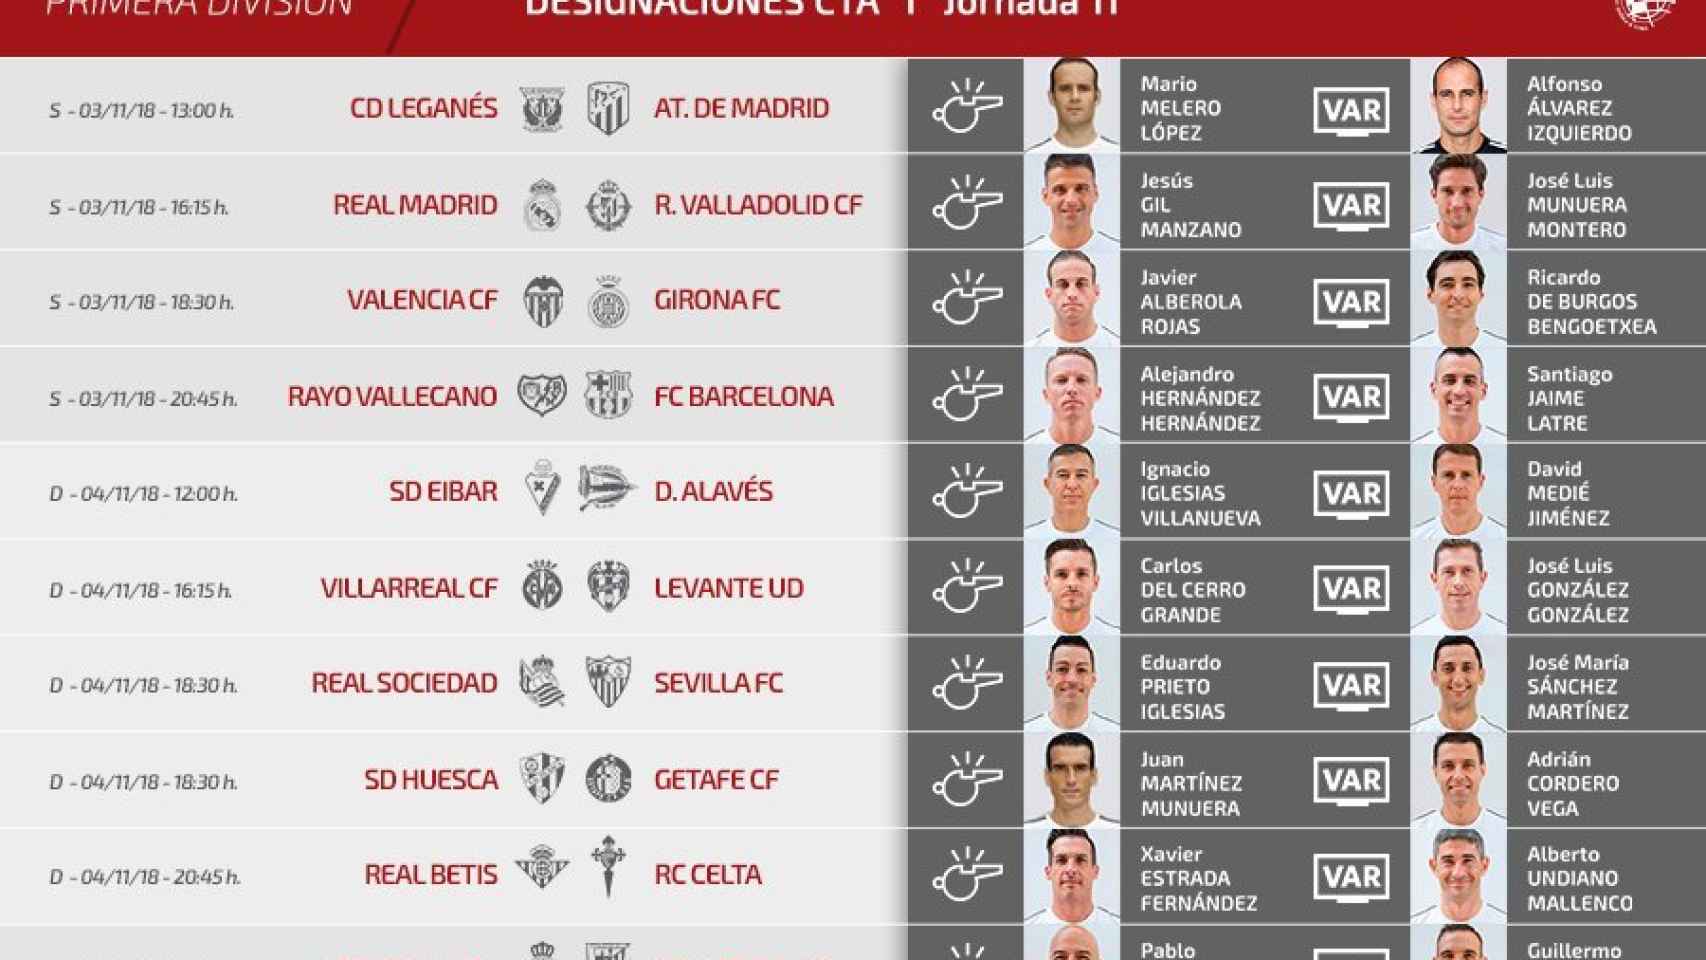 Designaciones arbitrales para la jornada 11 de La Liga. Foto: Twitter (@rfef)